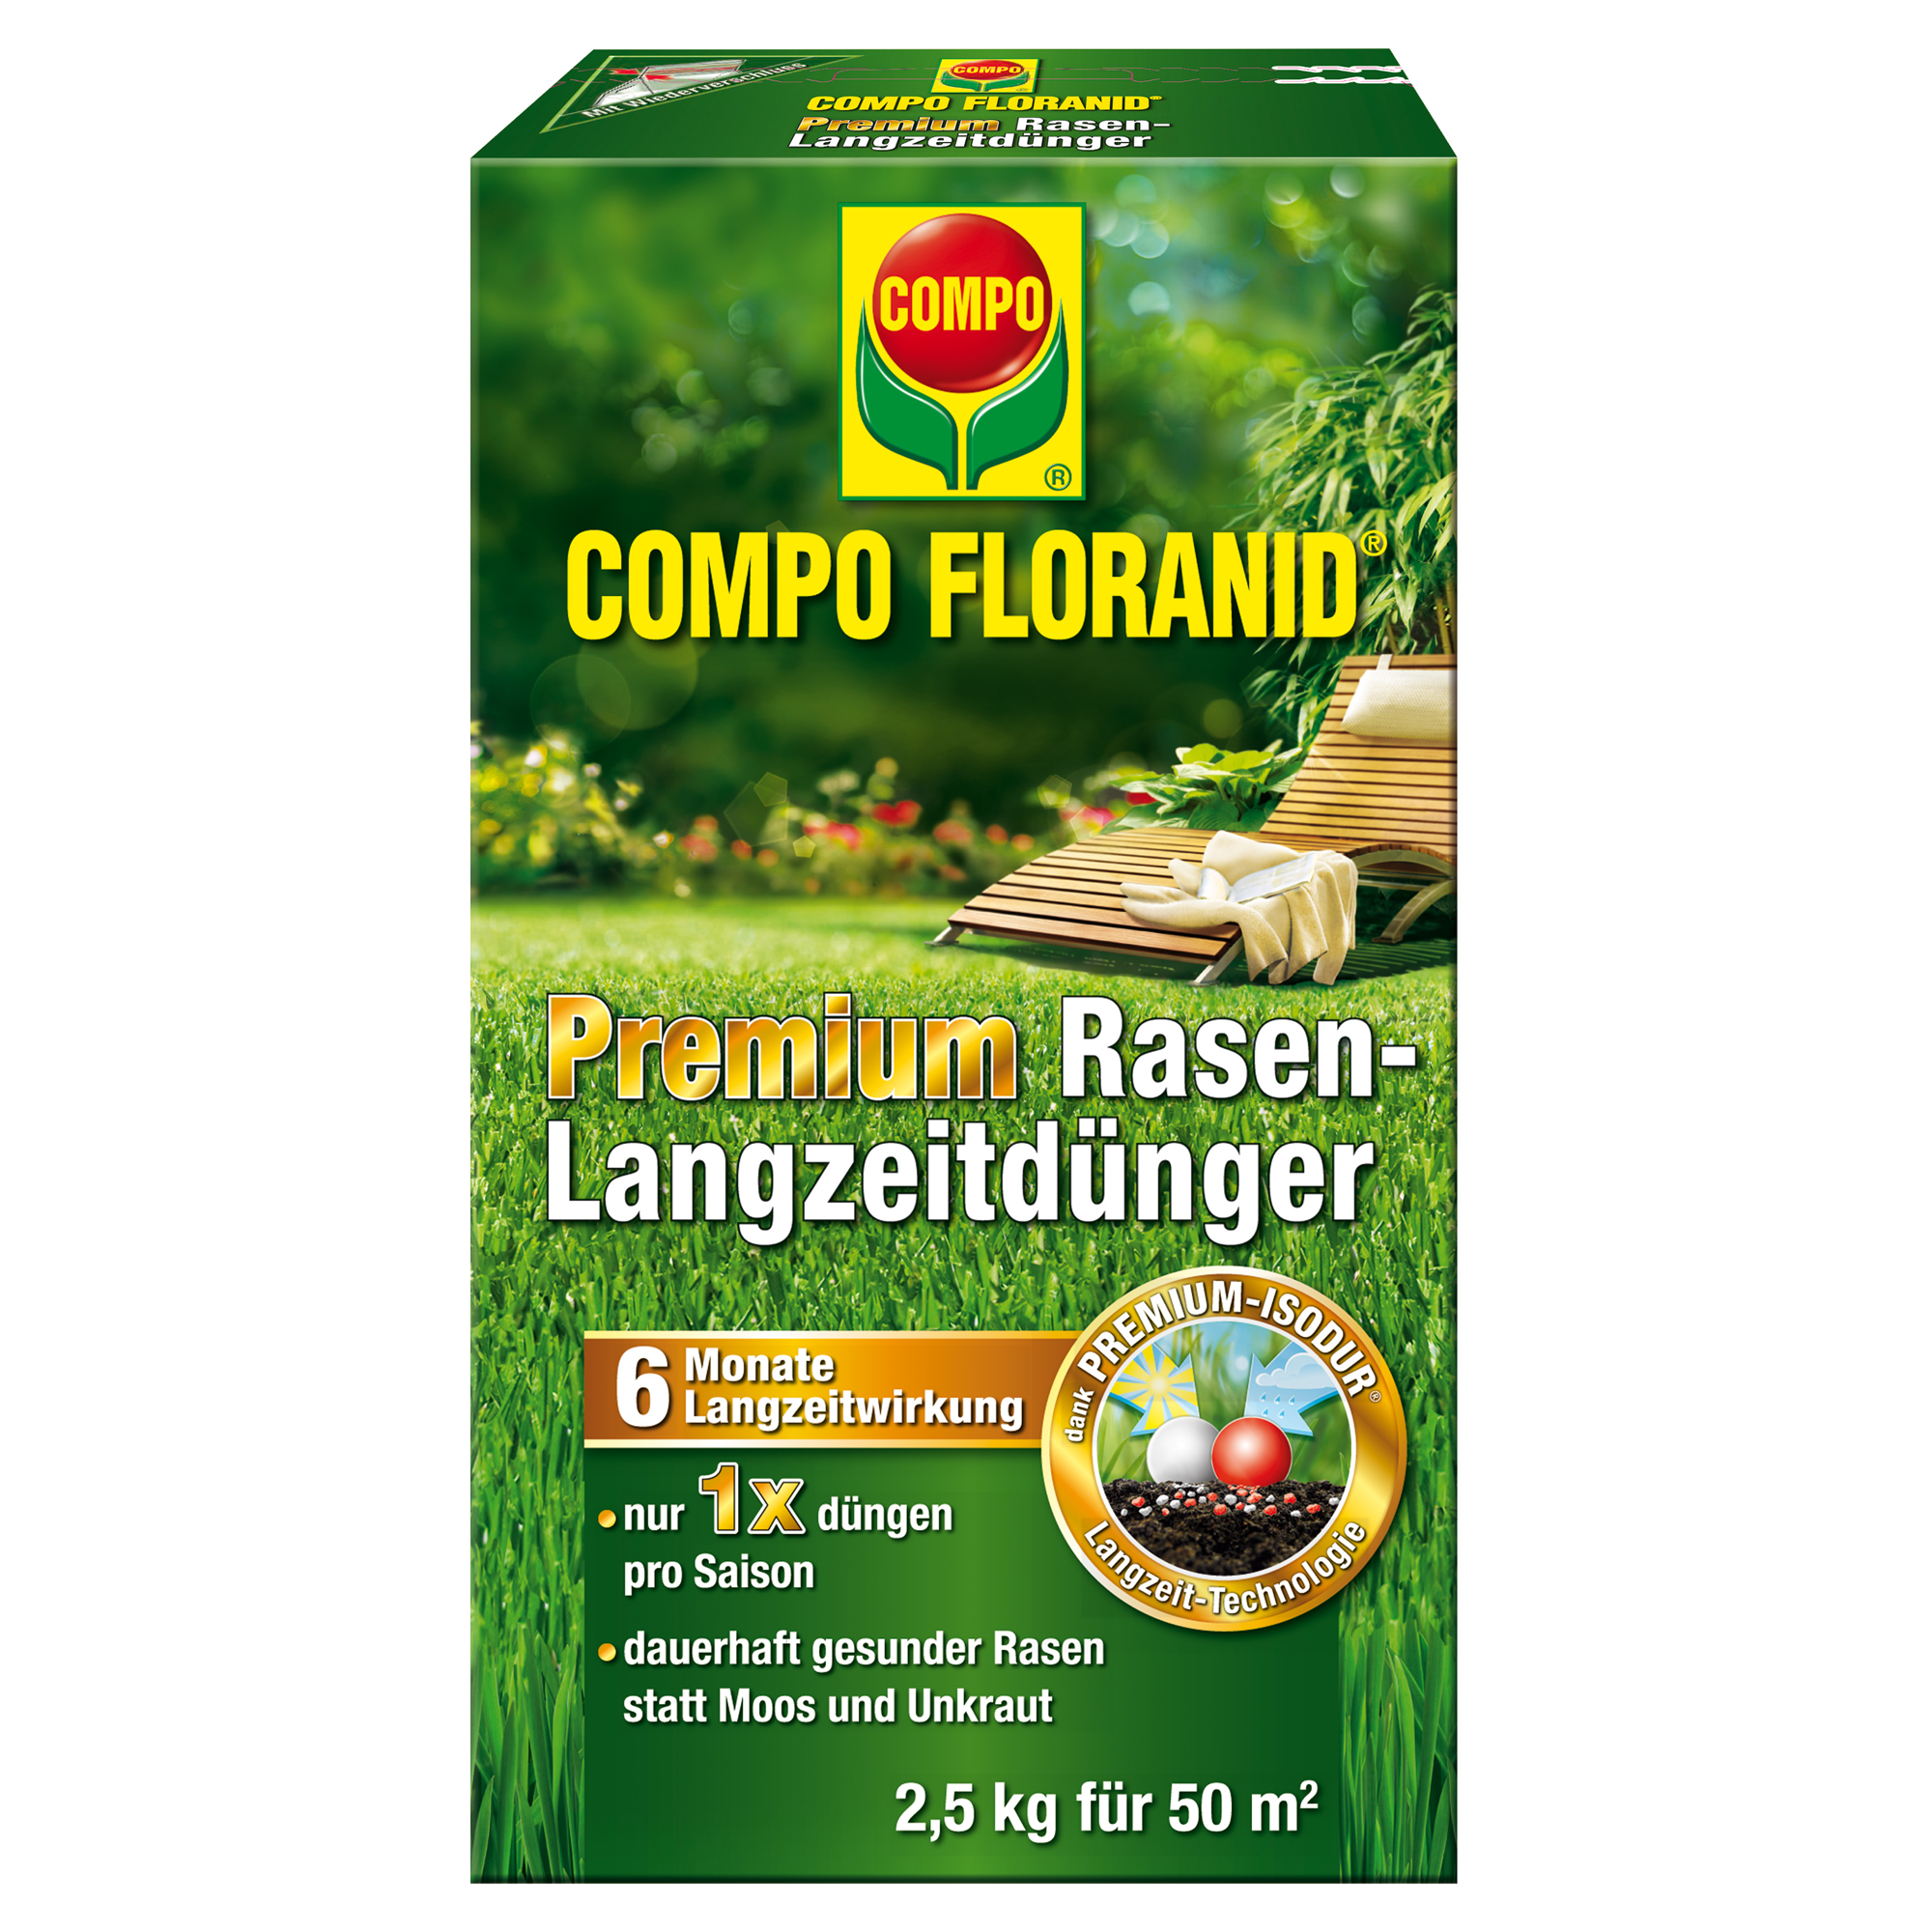 Premium-Rasendünger "Floranid" 2,5 kg + product picture